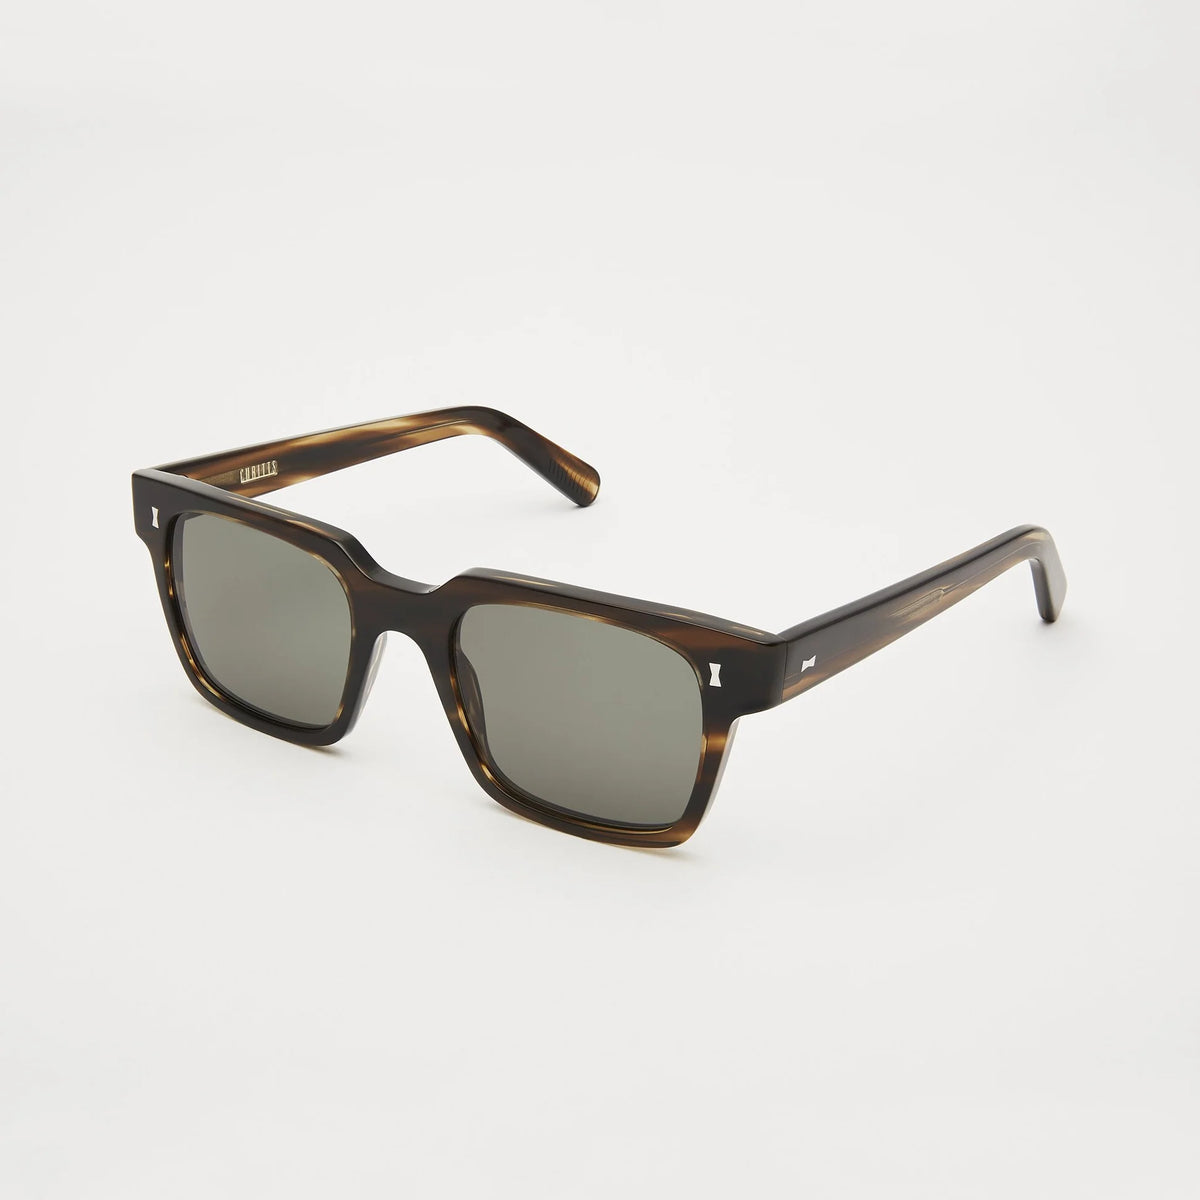 Olive Cubitts Panton sunglasses